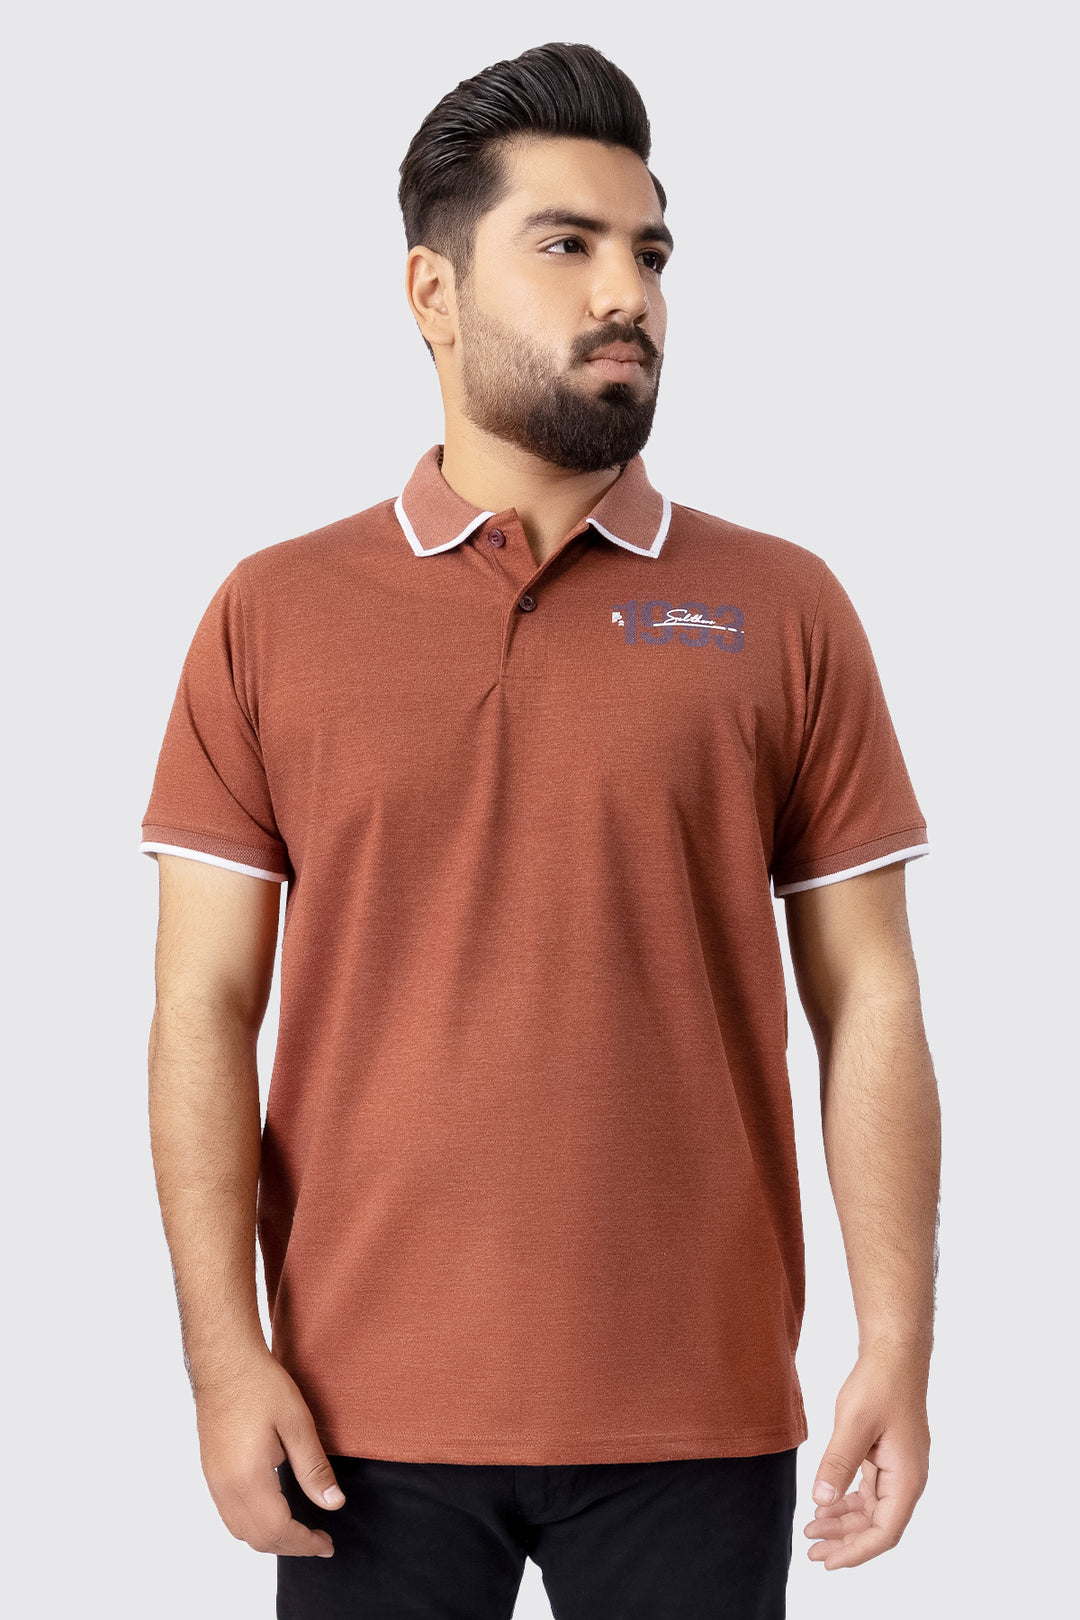 Brown Melange & Blue Tipped Collar Polo Shirt (Plus Size) - A23 - MP0182P